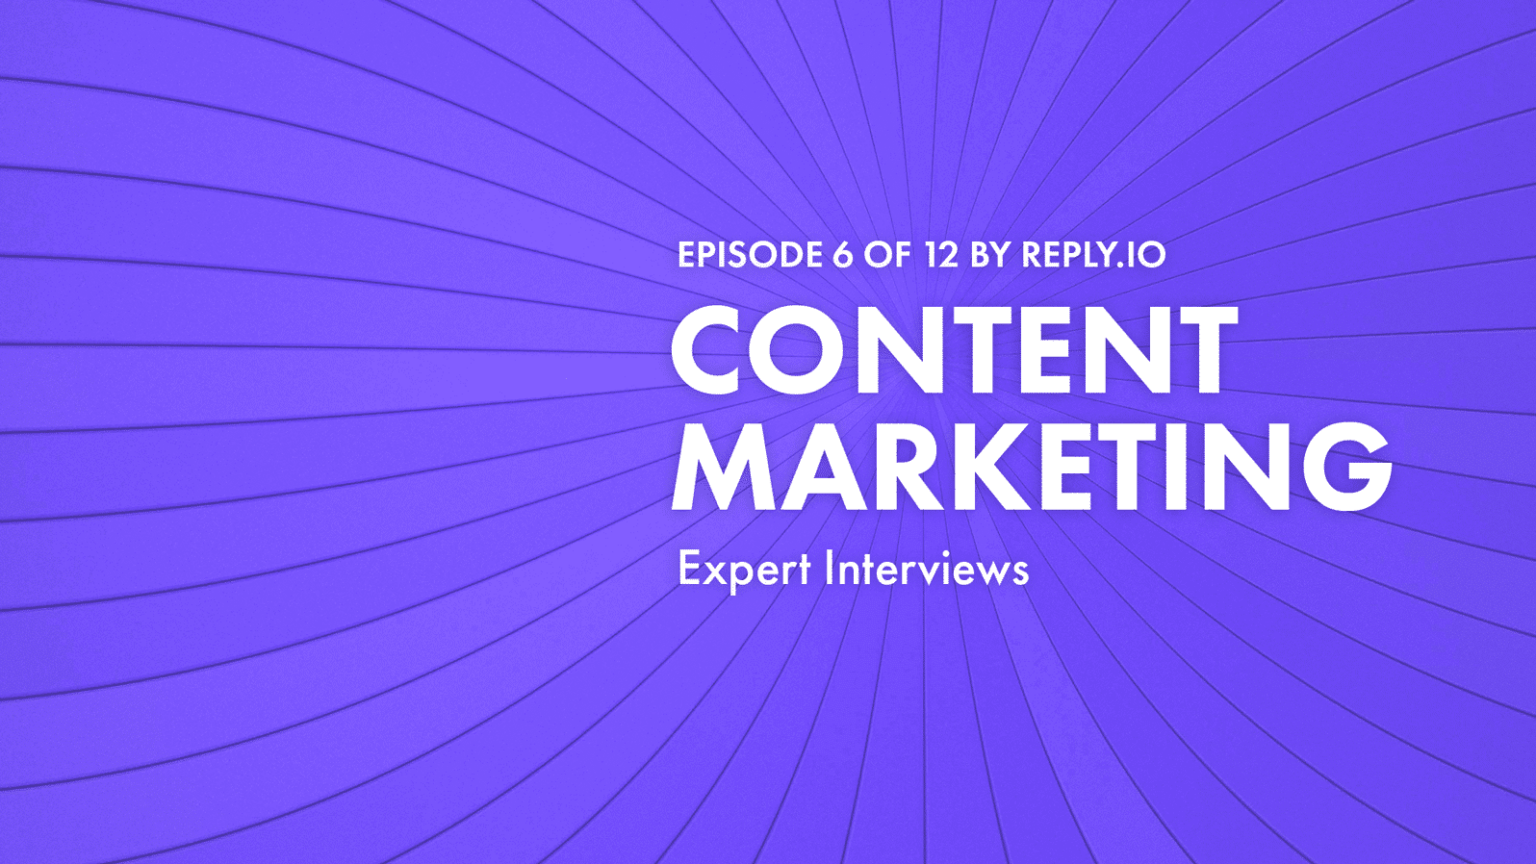 Top 3 Content Marketing Tactics In B2B [Expert Interviews]